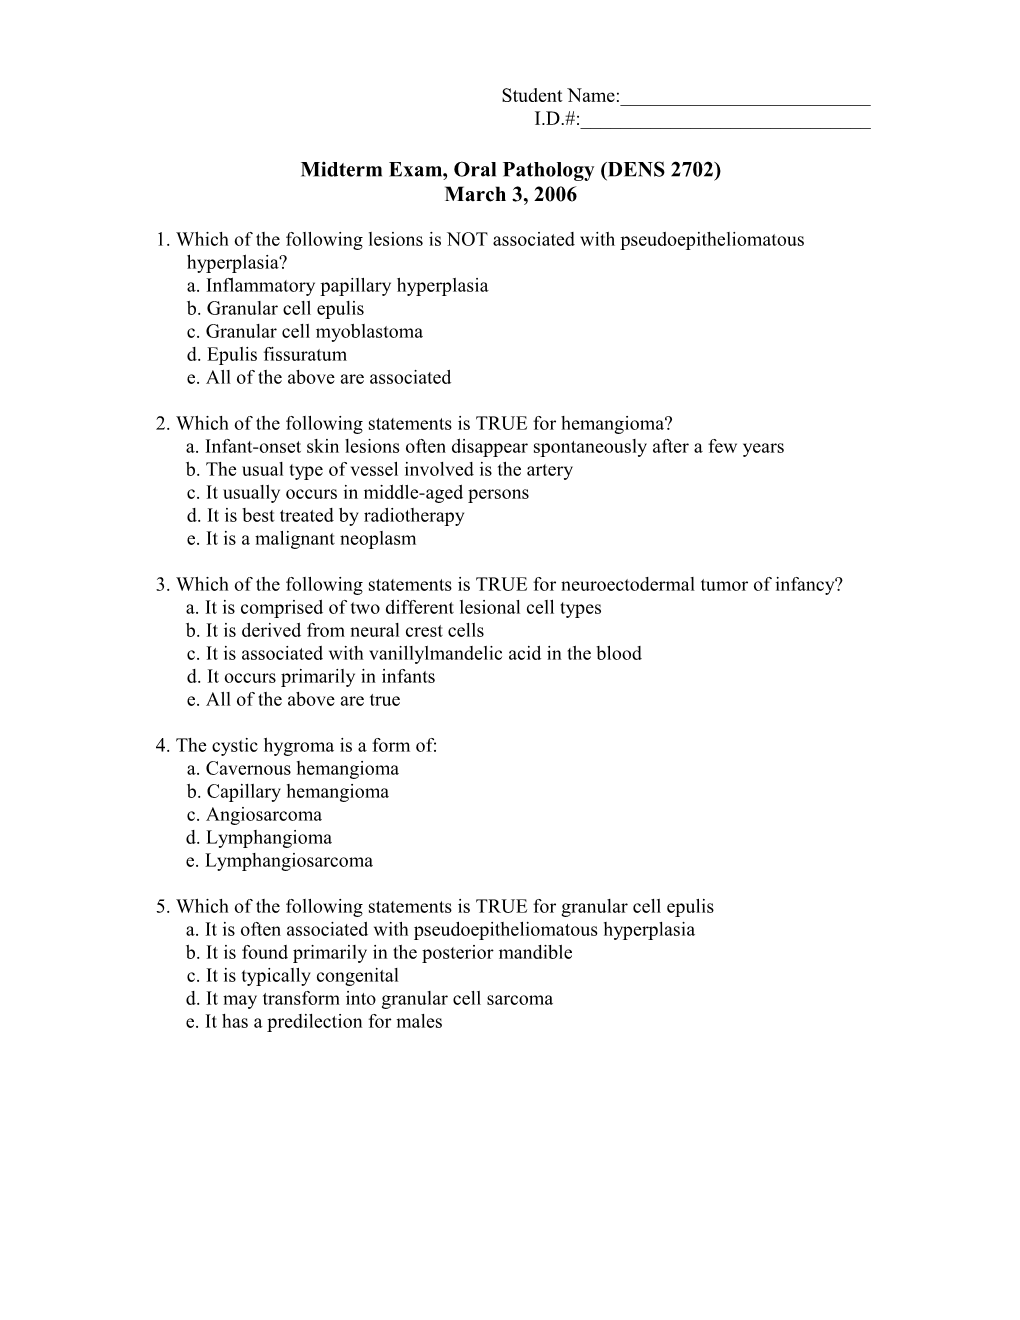 Midterm Exam, Oral Pathology (DENS 2702)